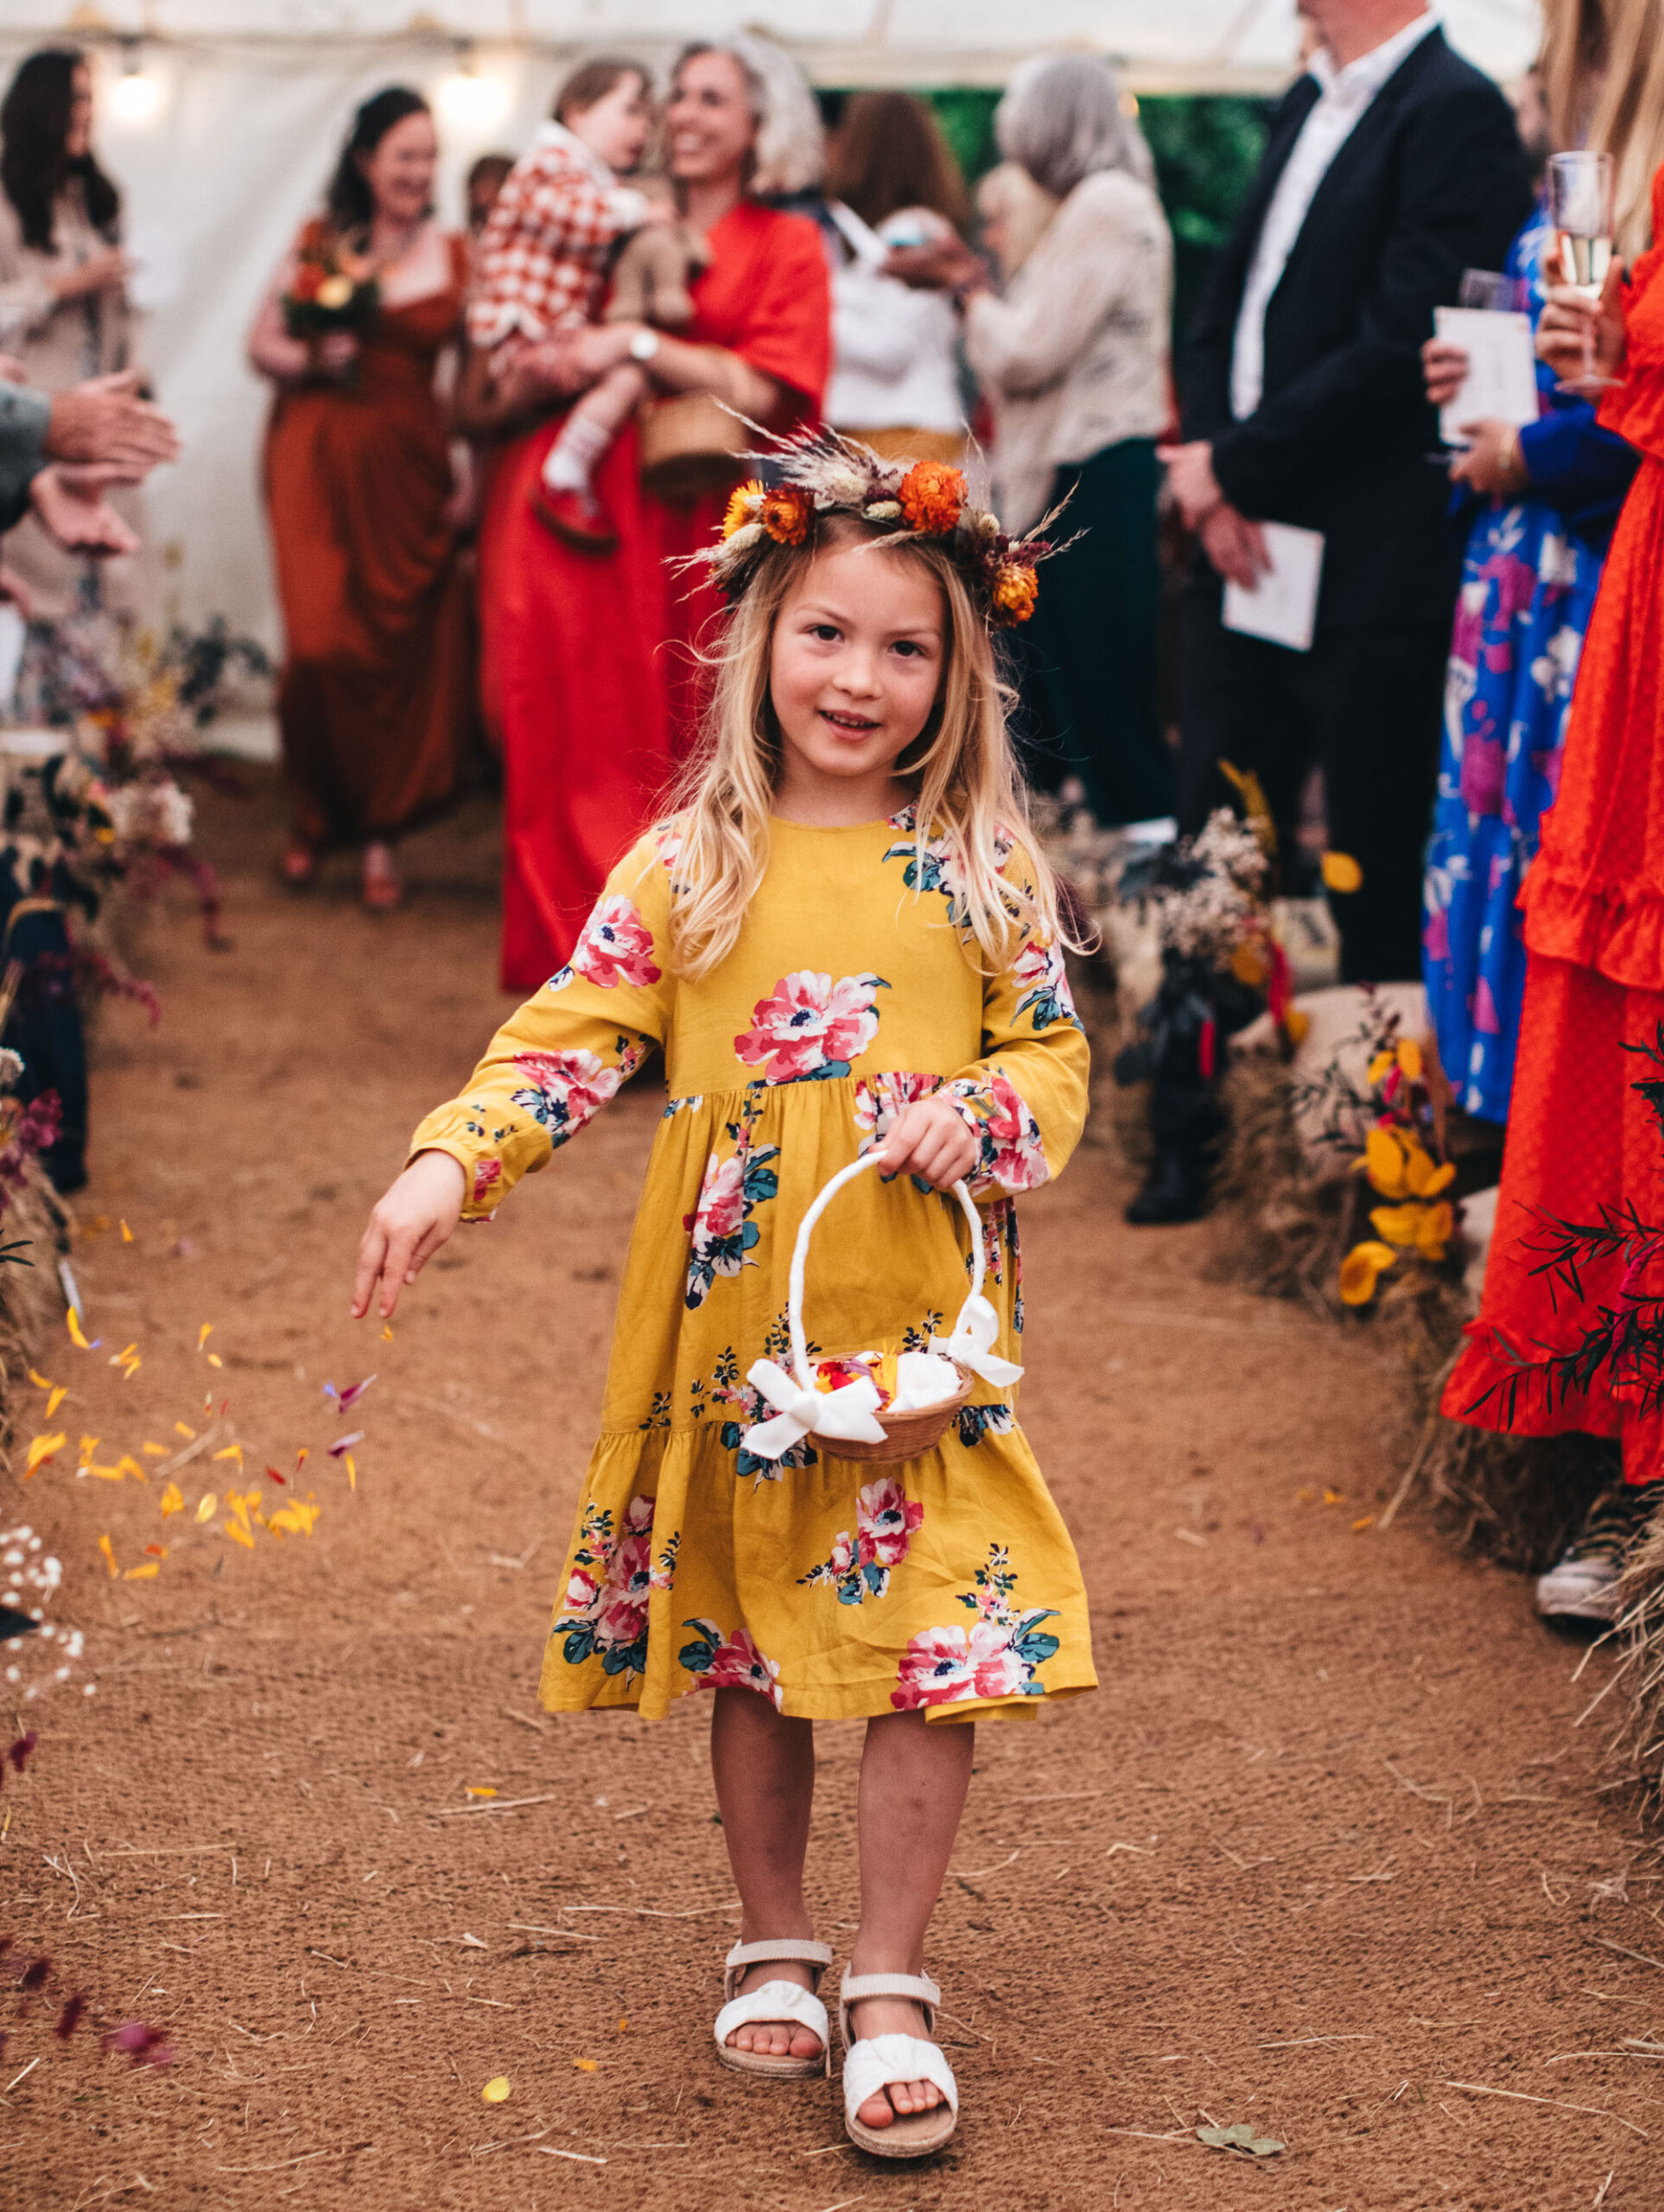 festival flower girl walking down aisle sprinkling petals, with floral headdress